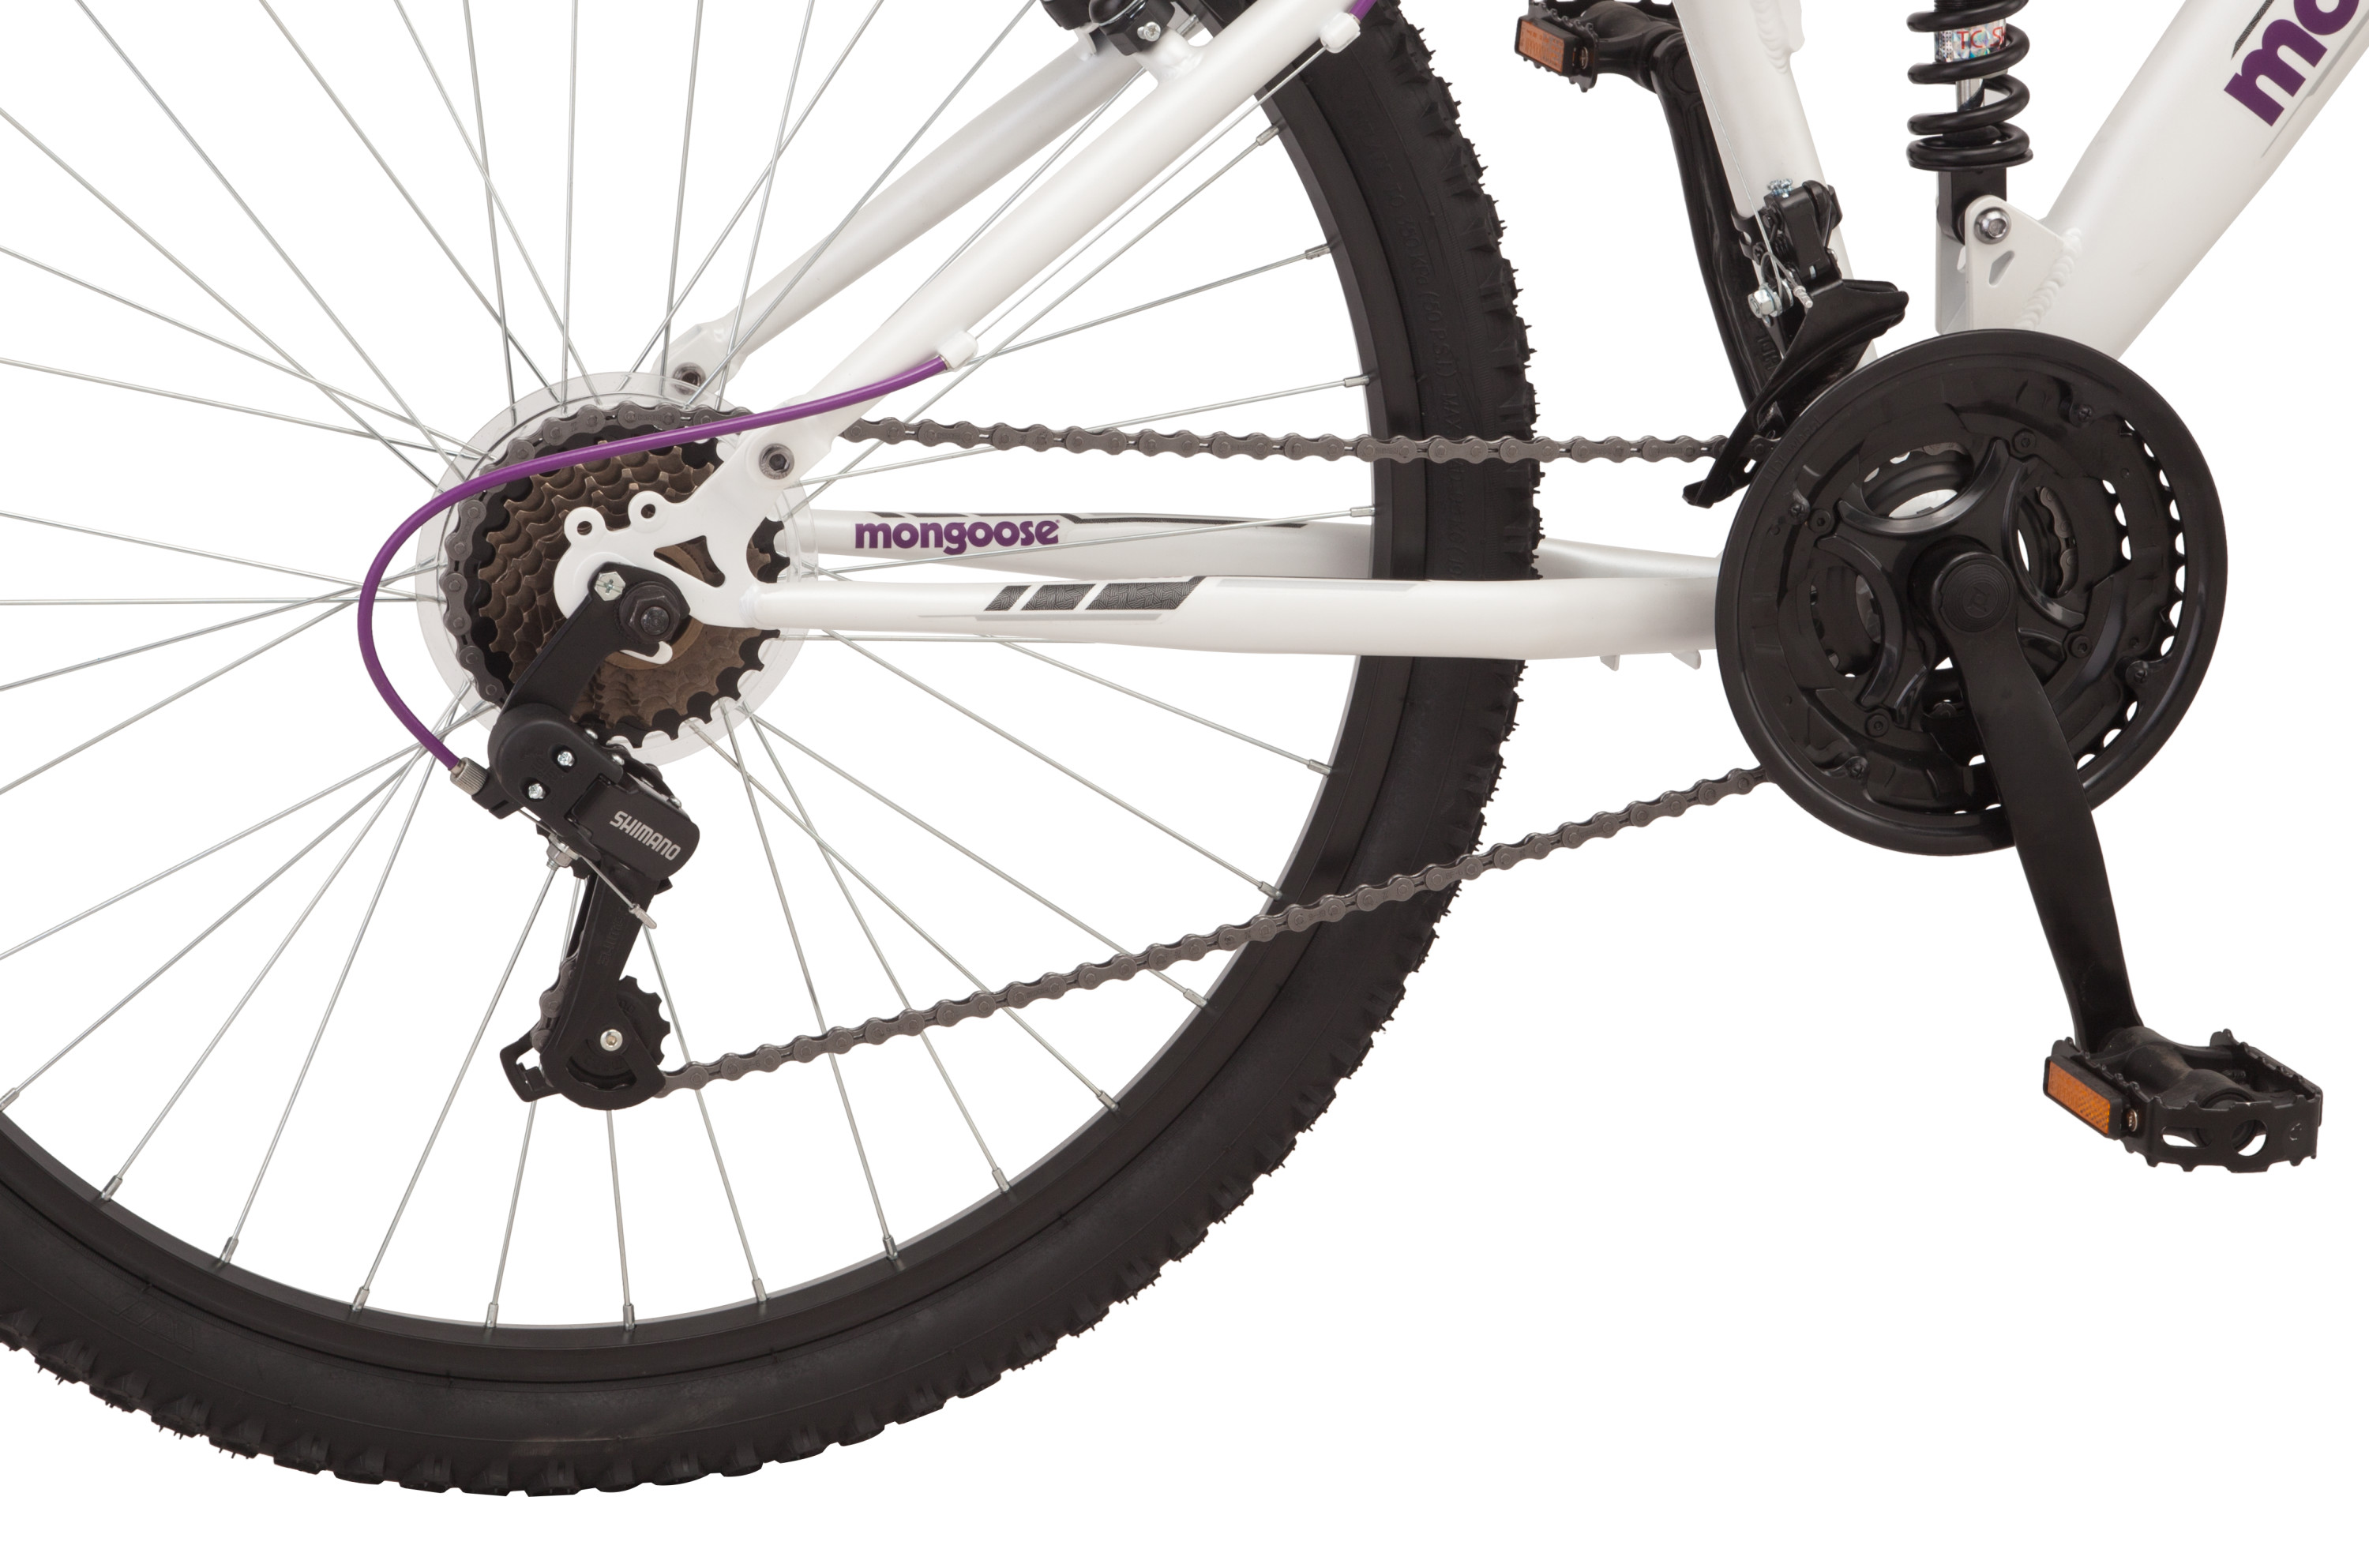 Mongoose Ledge 2.1 Mountain Bike, 26-inch wheels, 21 speeds, womens frame, white - image 4 of 7